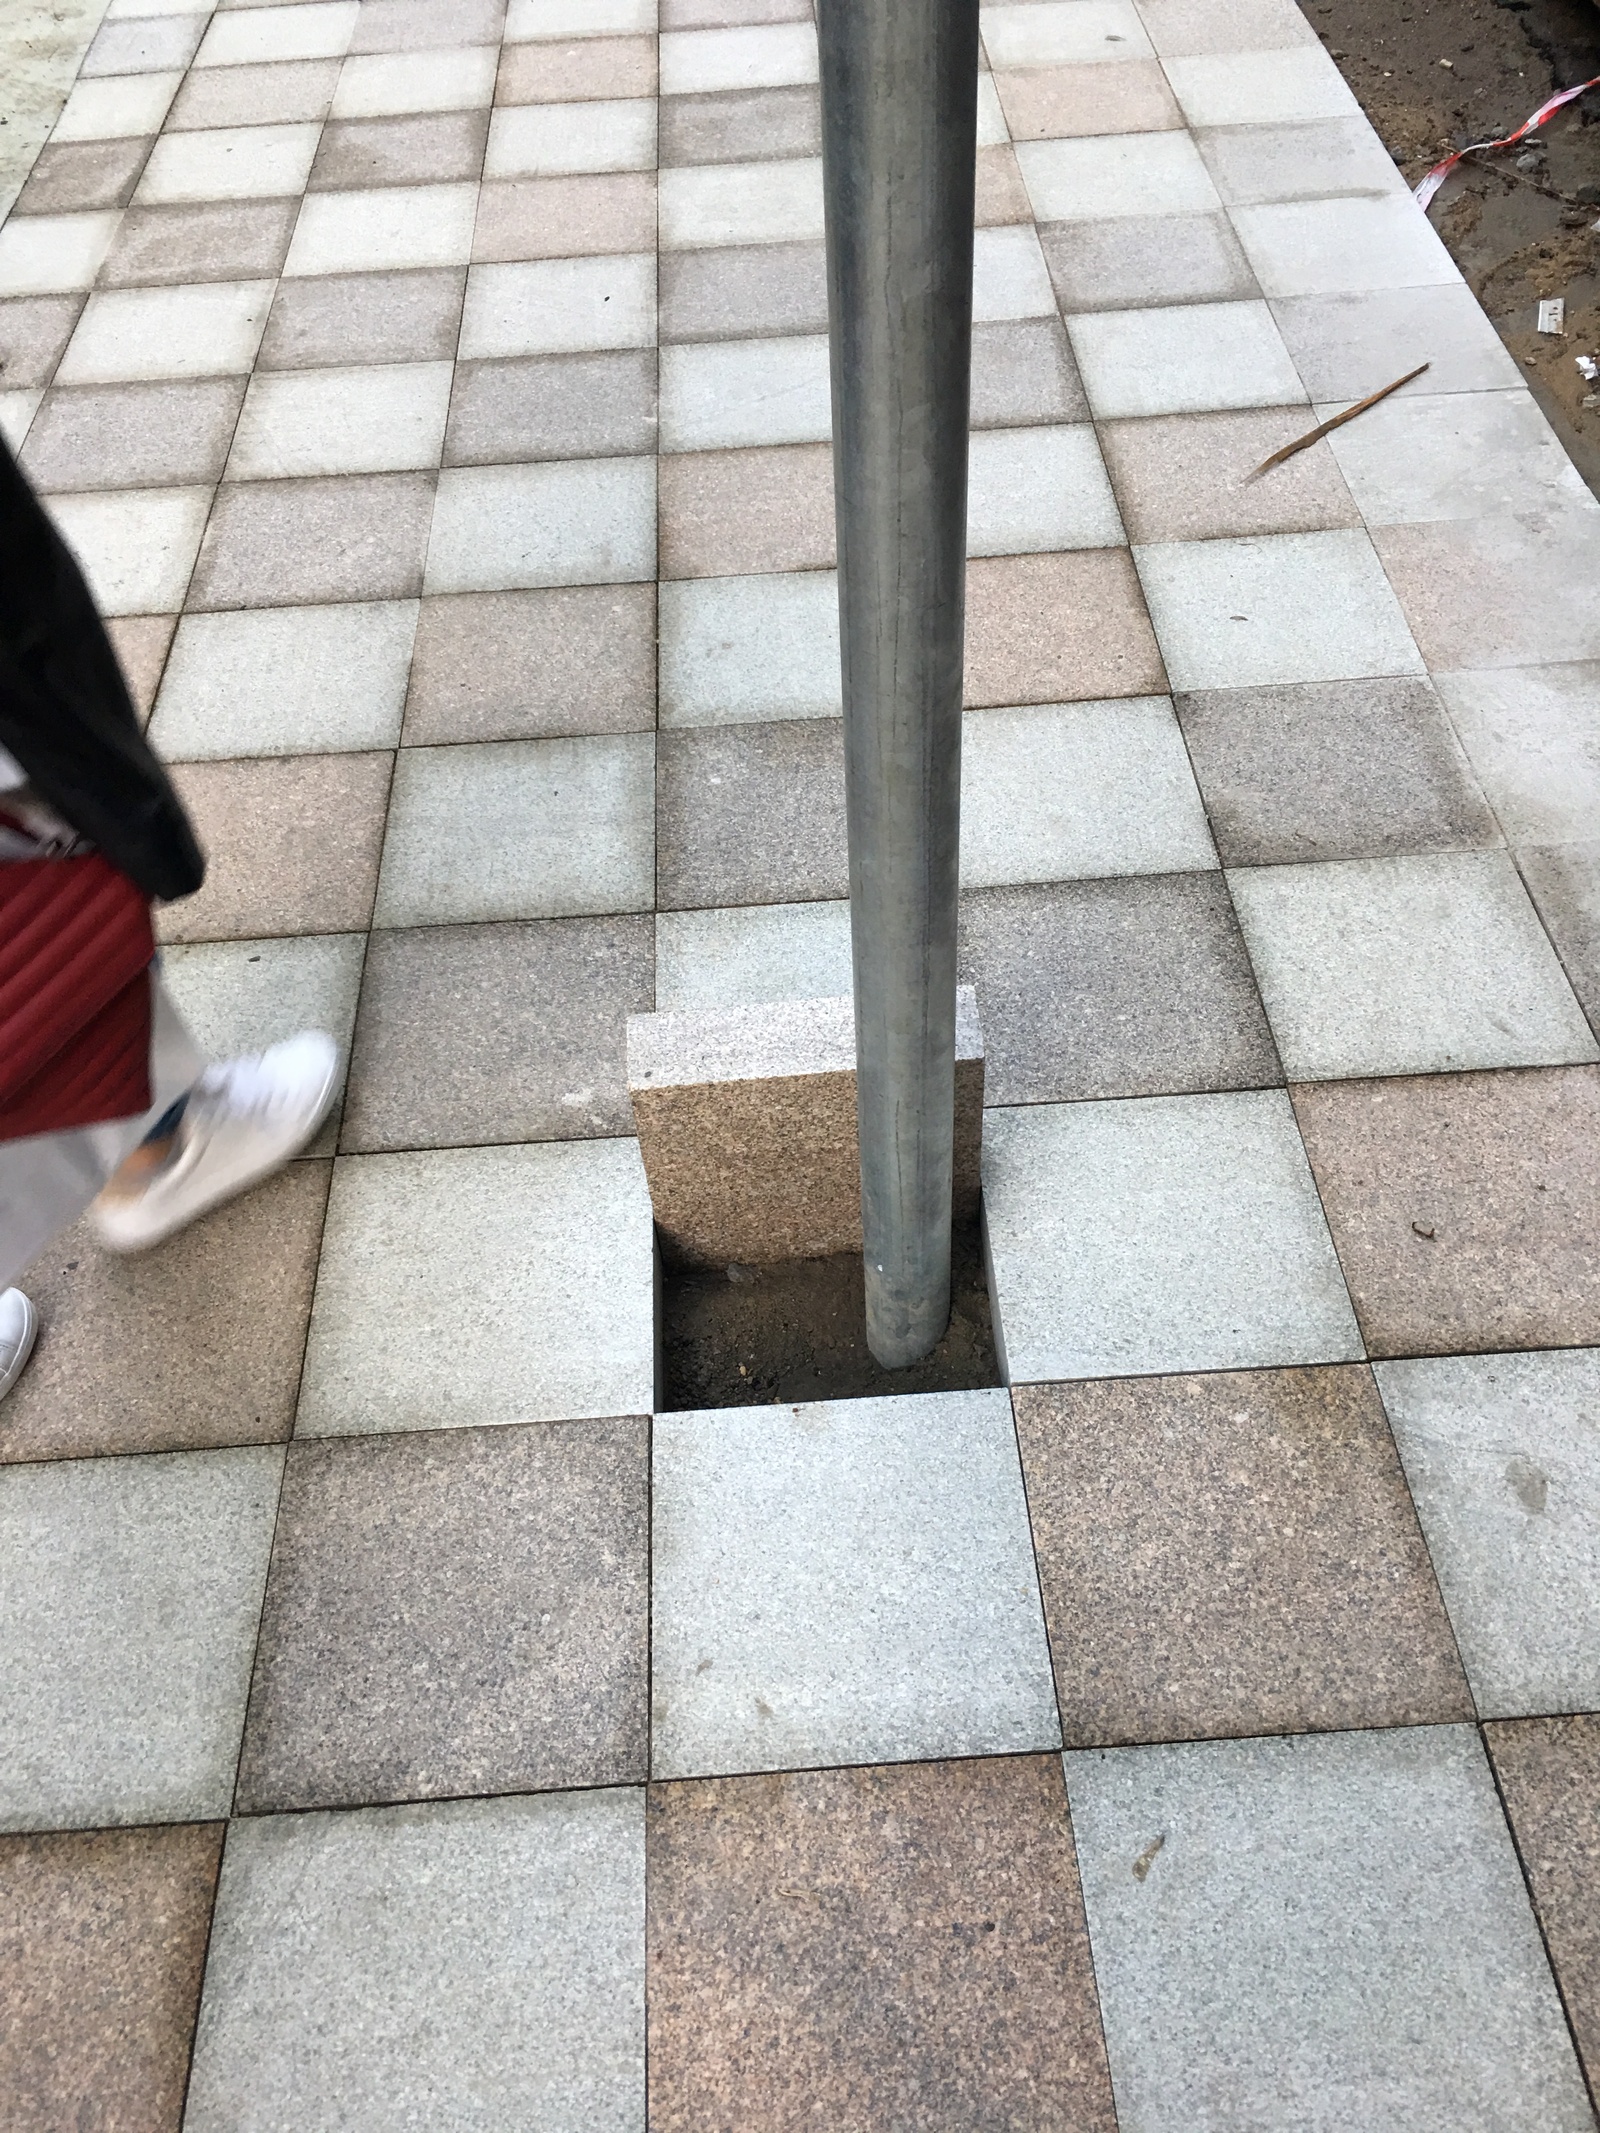 Sobyanin tilers in Moscow - My, Moscow, Tile, Sidewalk